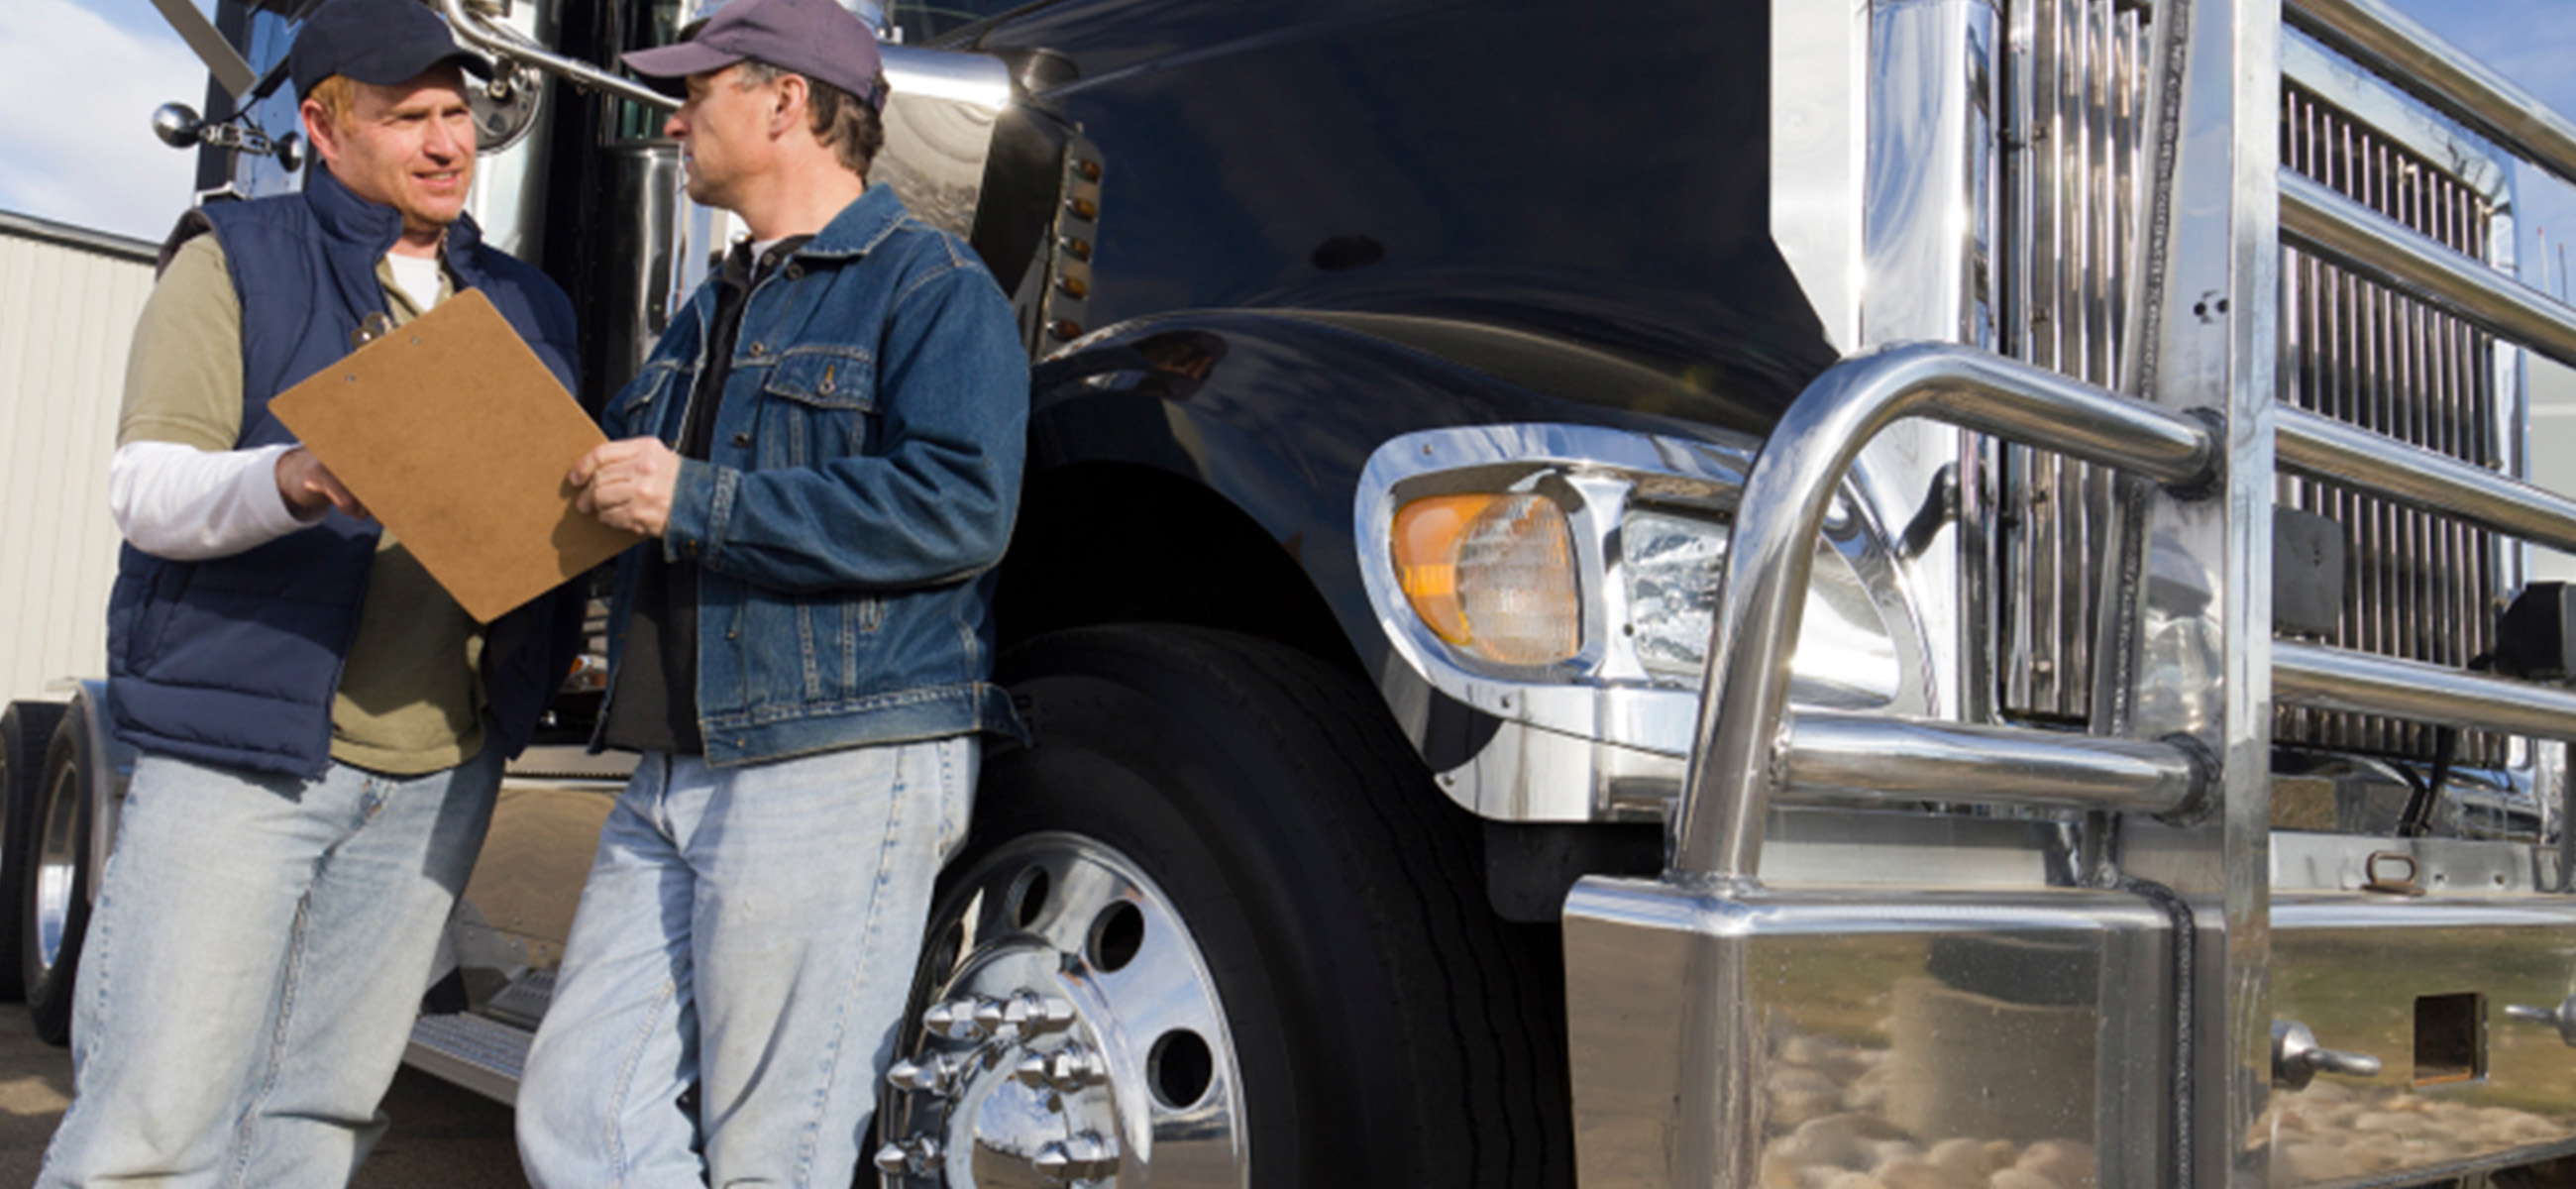 colorado Trucking Insurance Coverage